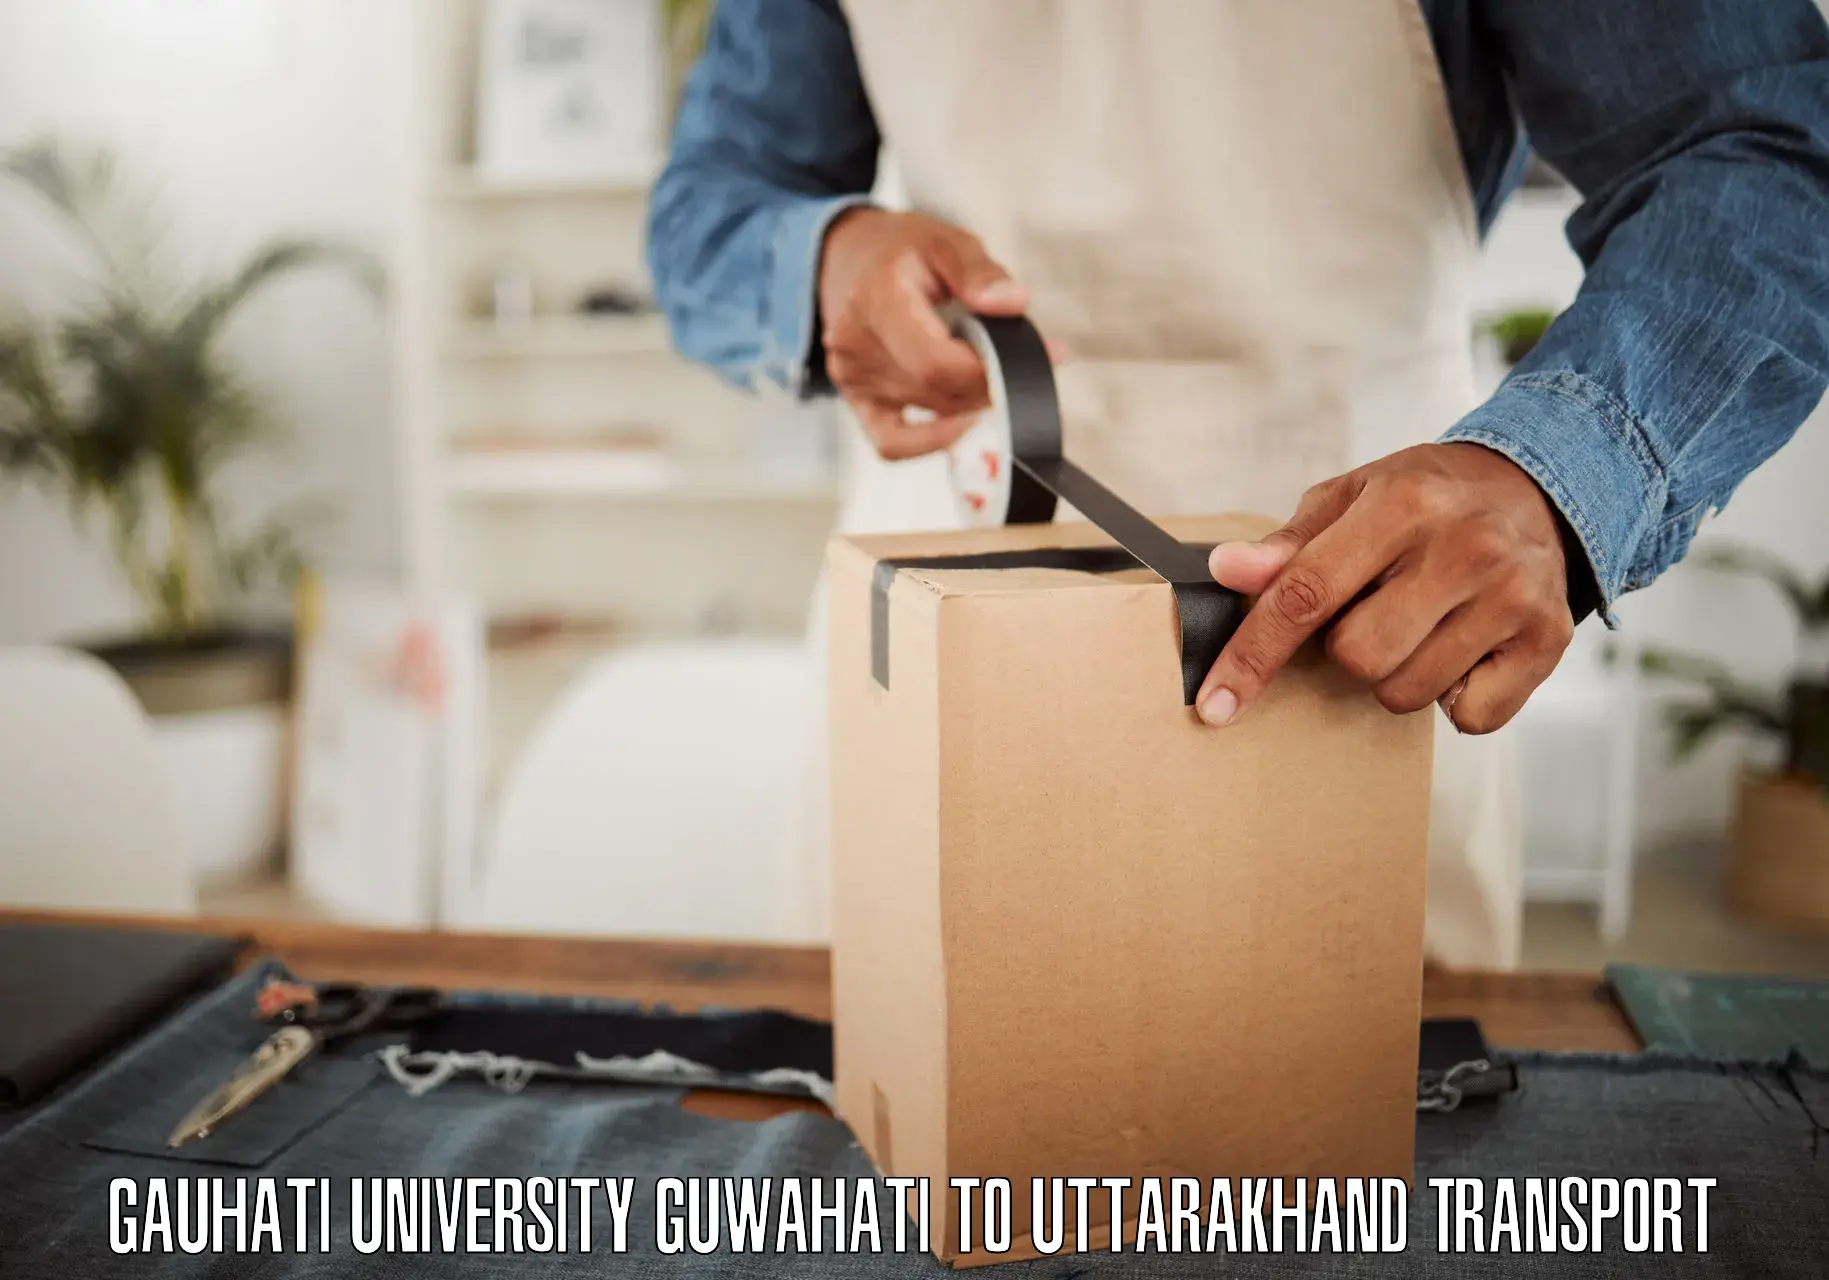 Transport bike from one state to another Gauhati University Guwahati to Haridwar